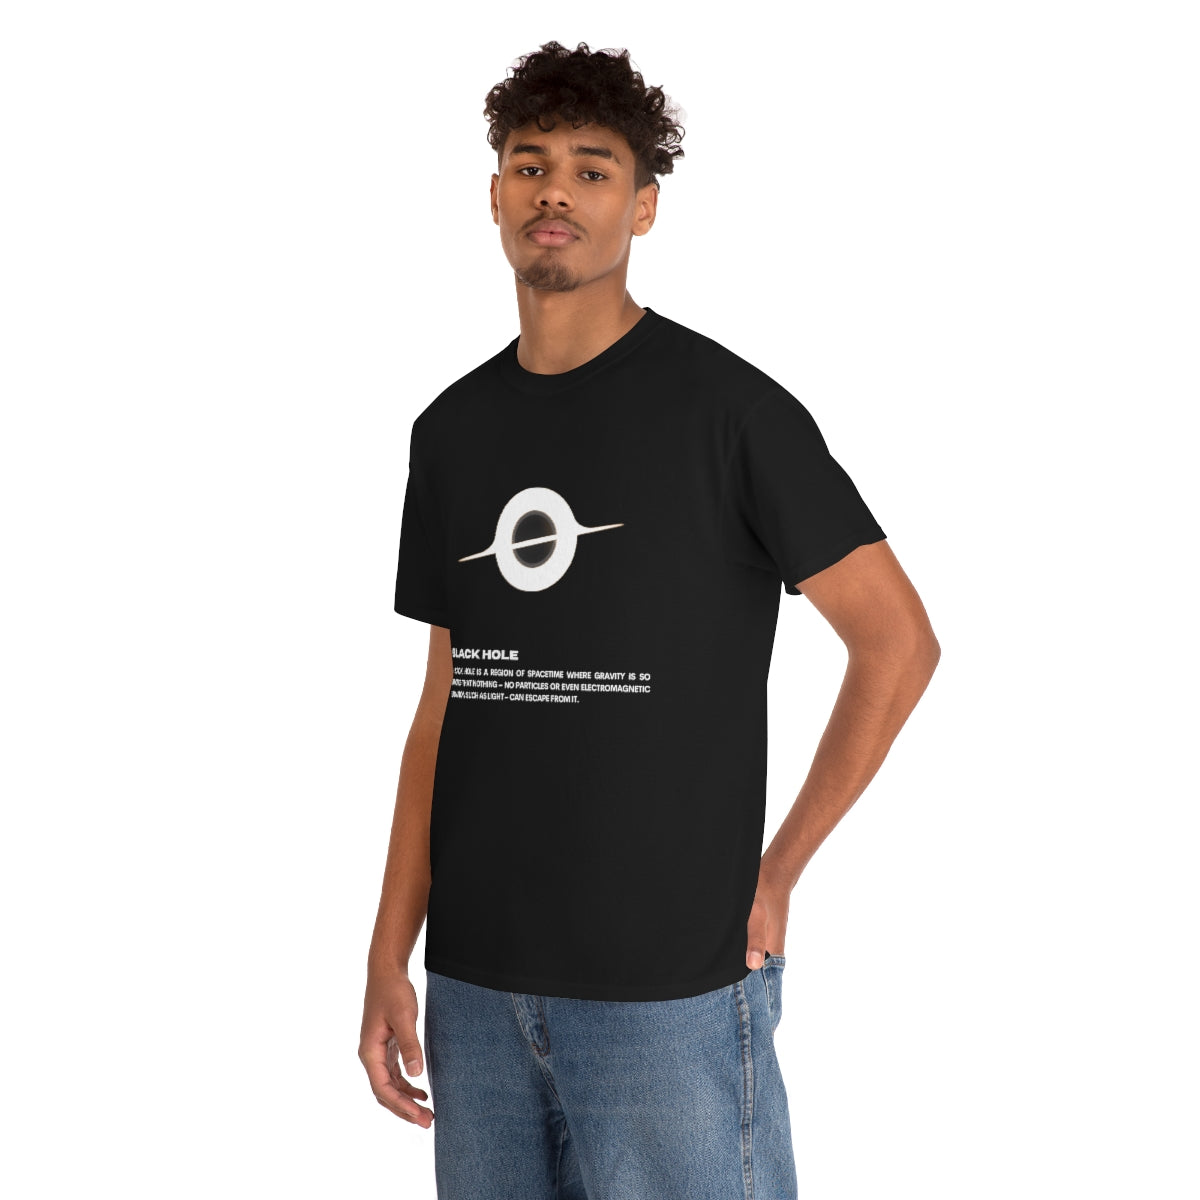 Interstellar - The Black Hole Meaning Printed T-Shirt – Looper Tees